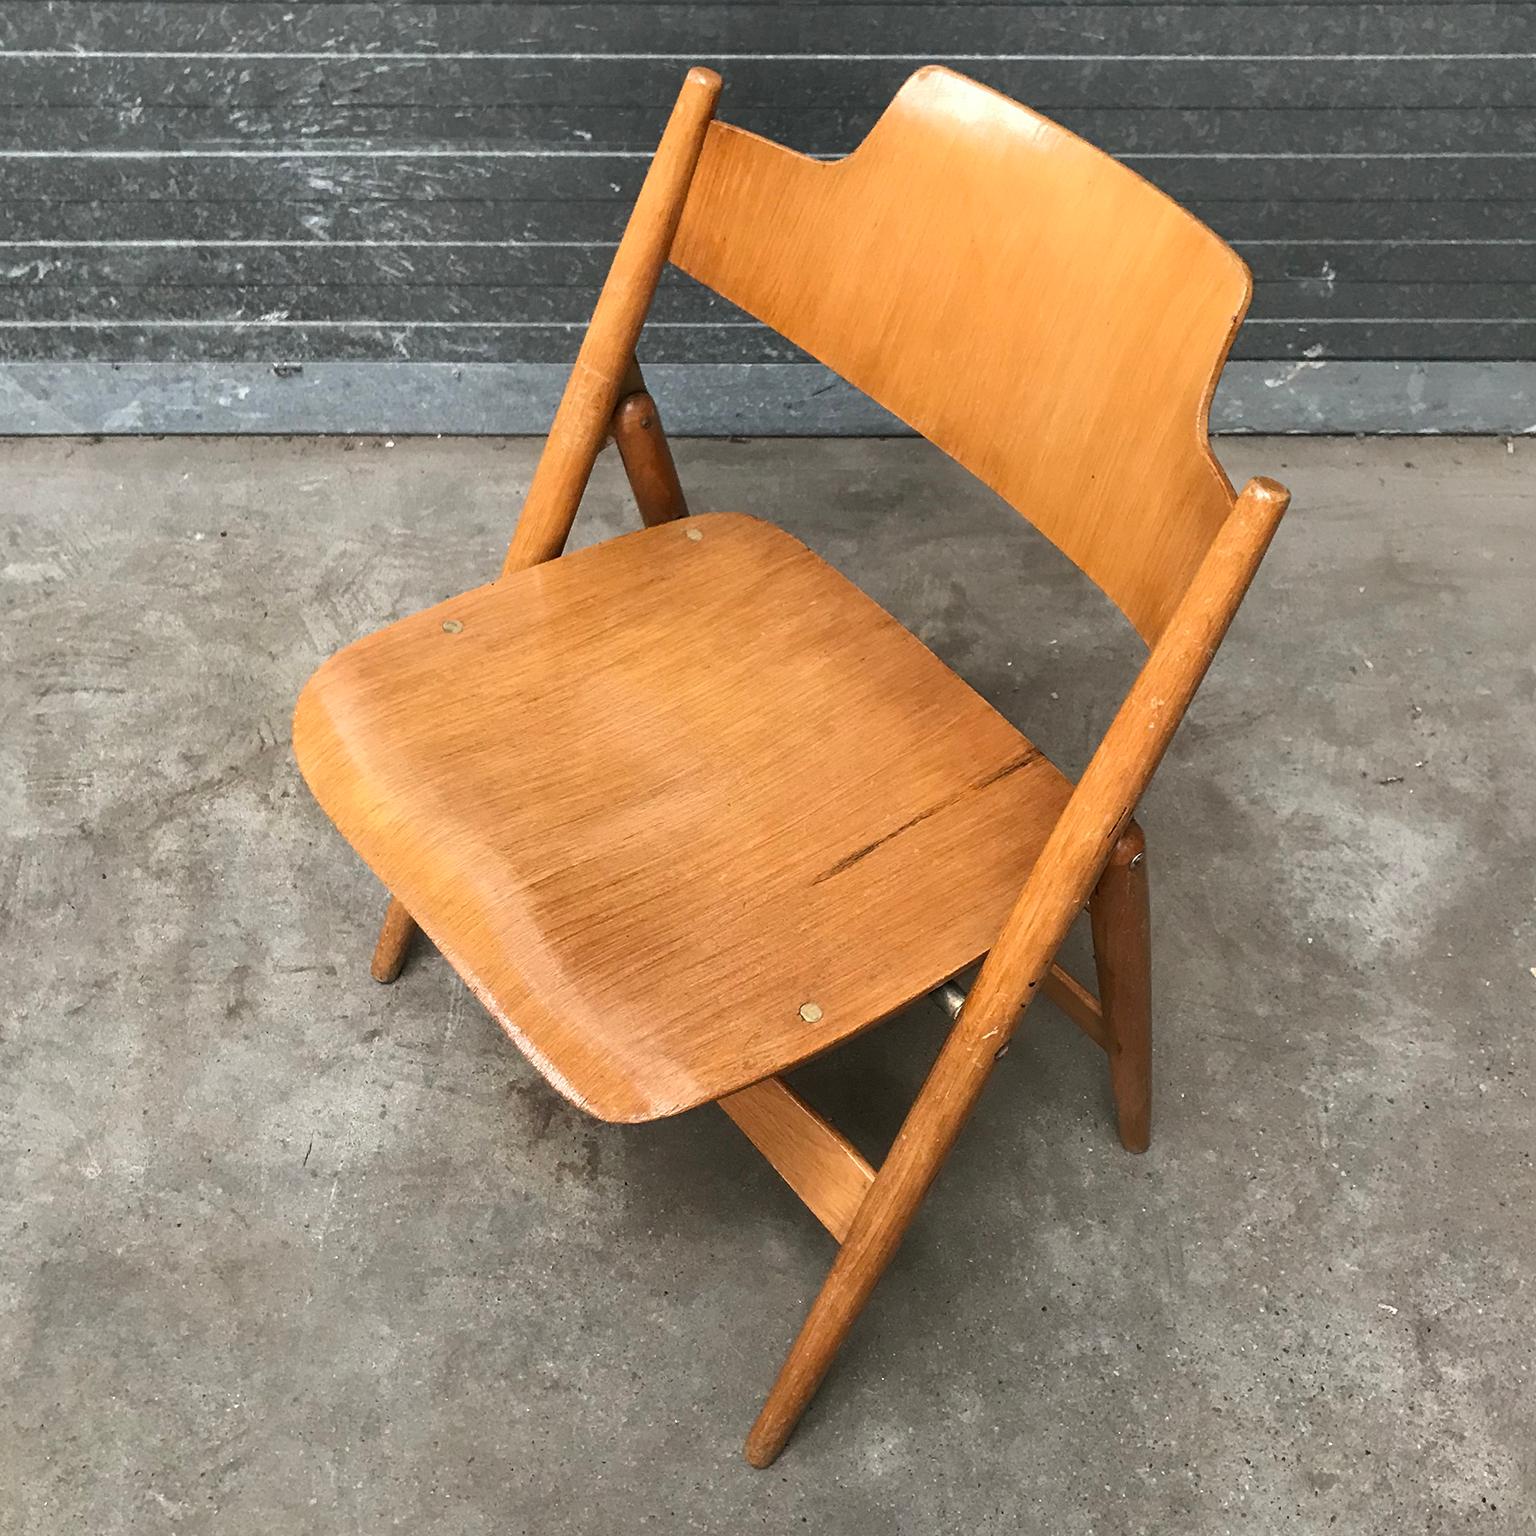 1952, Egon Eiermann for Wilde & Spieth, Wooden Folding Chair For Sale 3